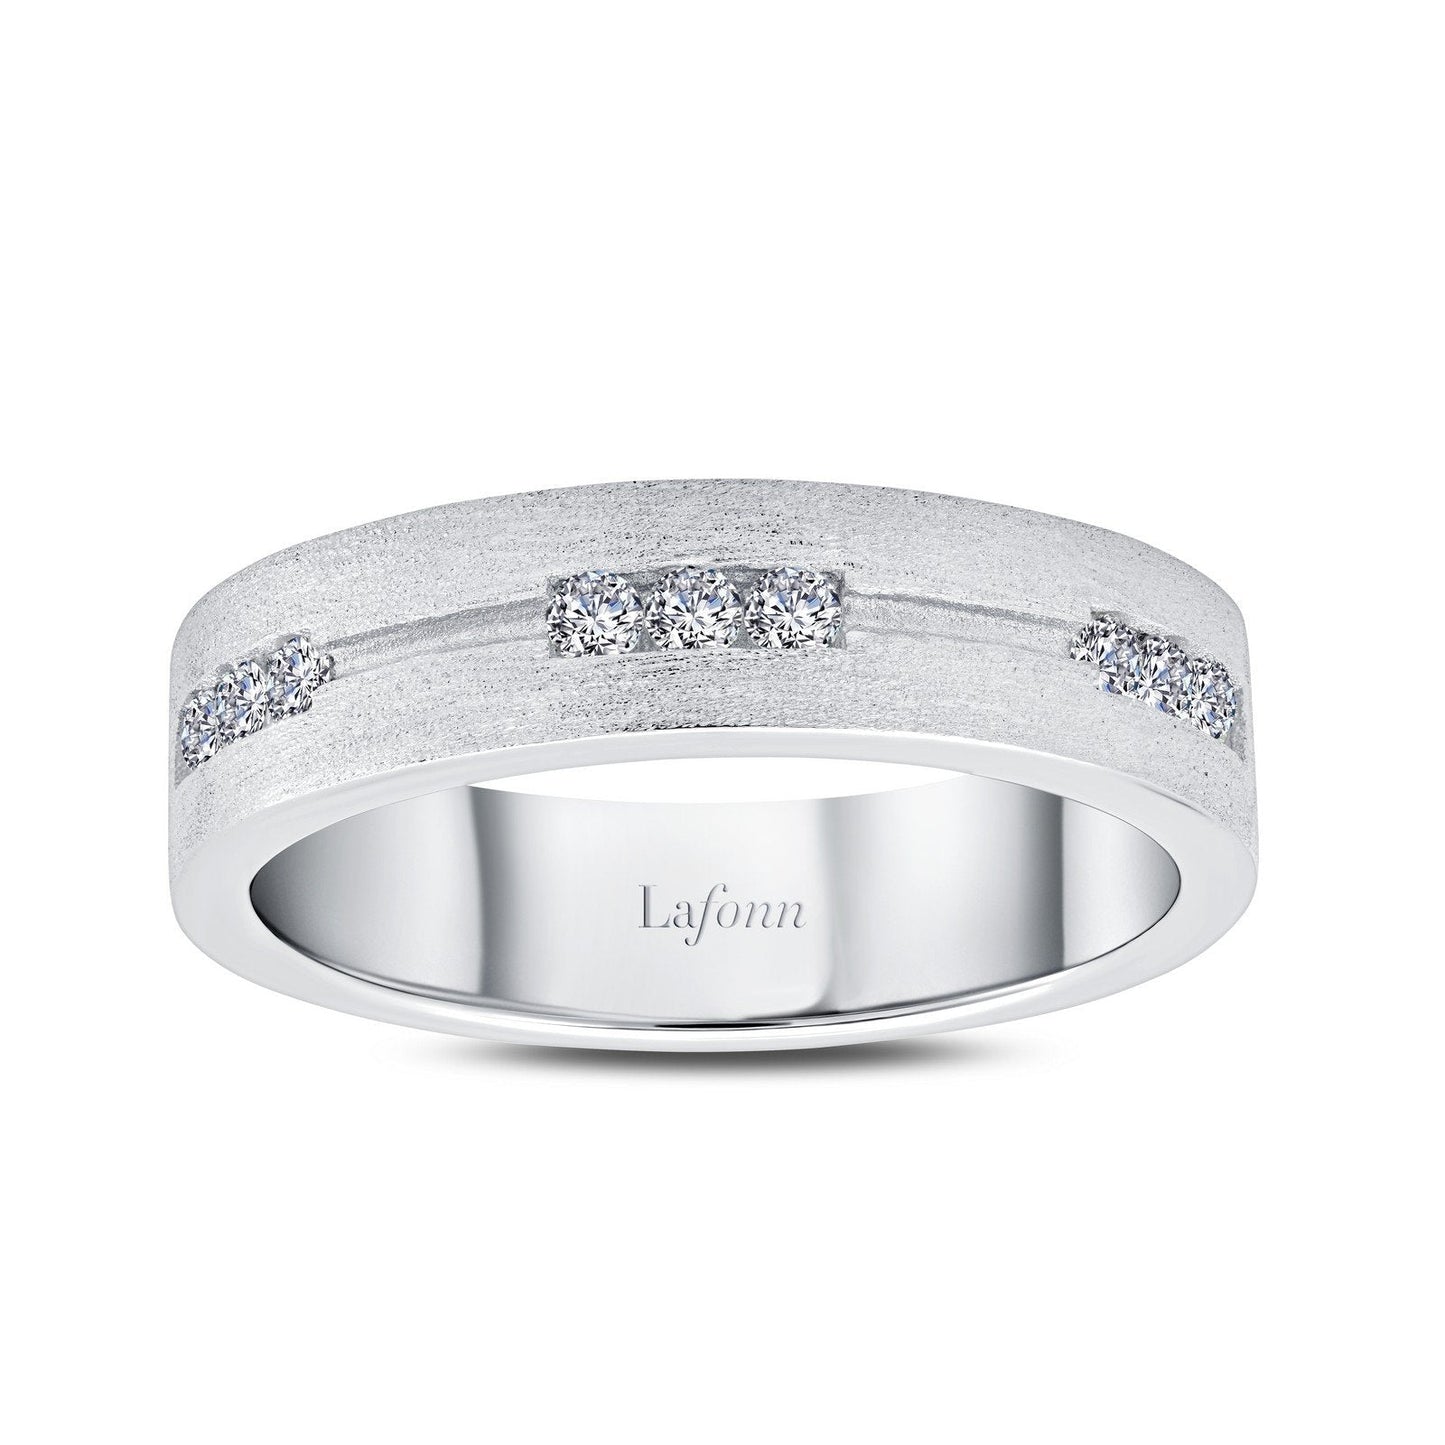 LaFonn Platinum Simulated Diamond N/A RINGS 0.27 CTW Men's Wedding Band